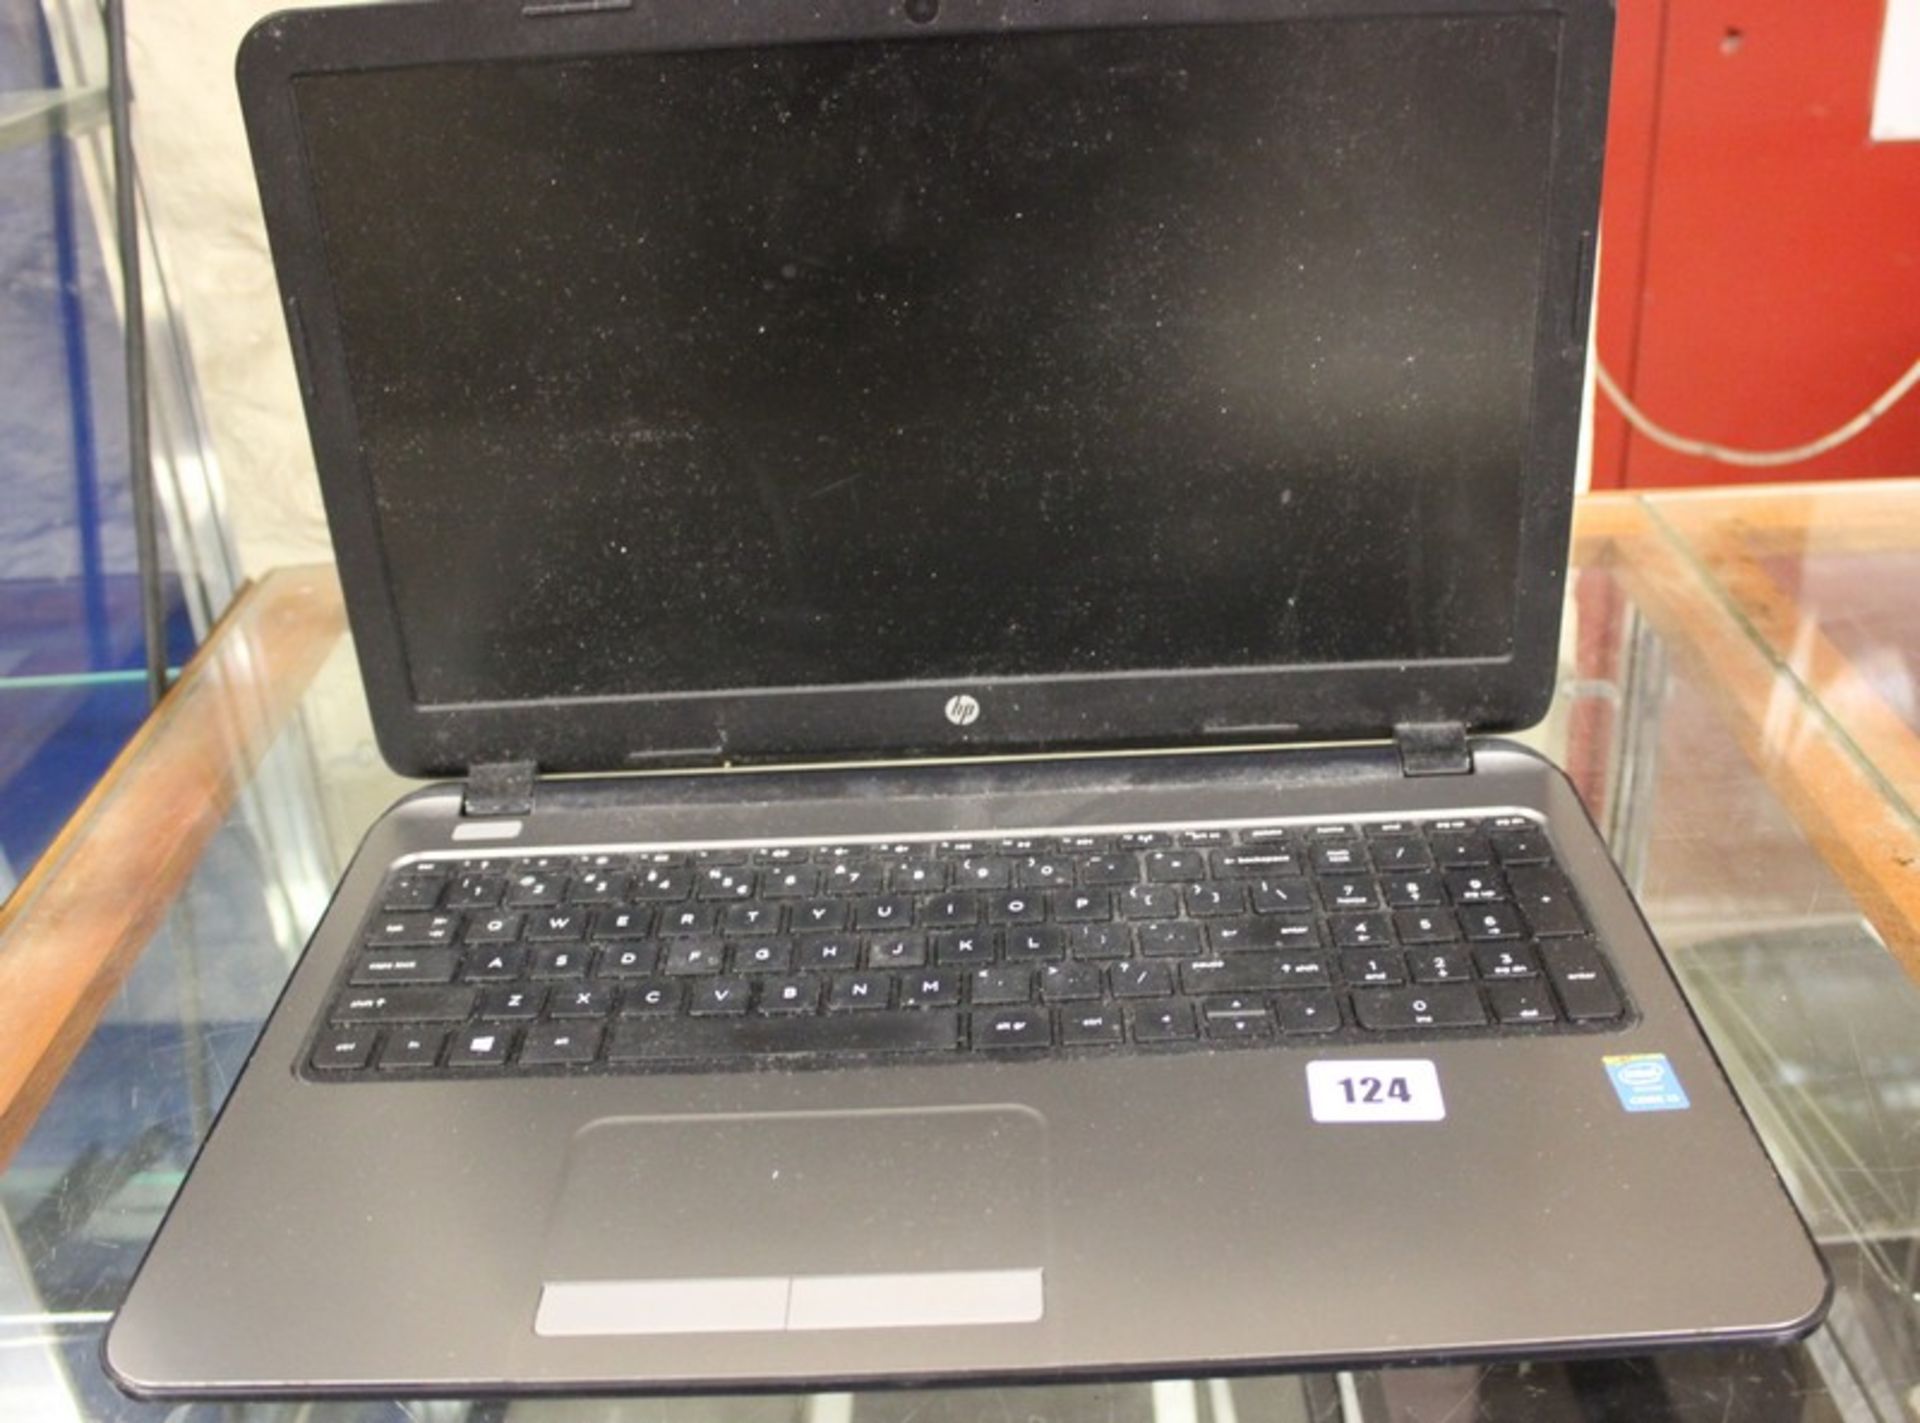 An HP 250 G3 Notebook with Windows 8.1 with Bing, Intel Core i3-4005U CPU @ 1.70GHz, 4GB RAM, 64-bit